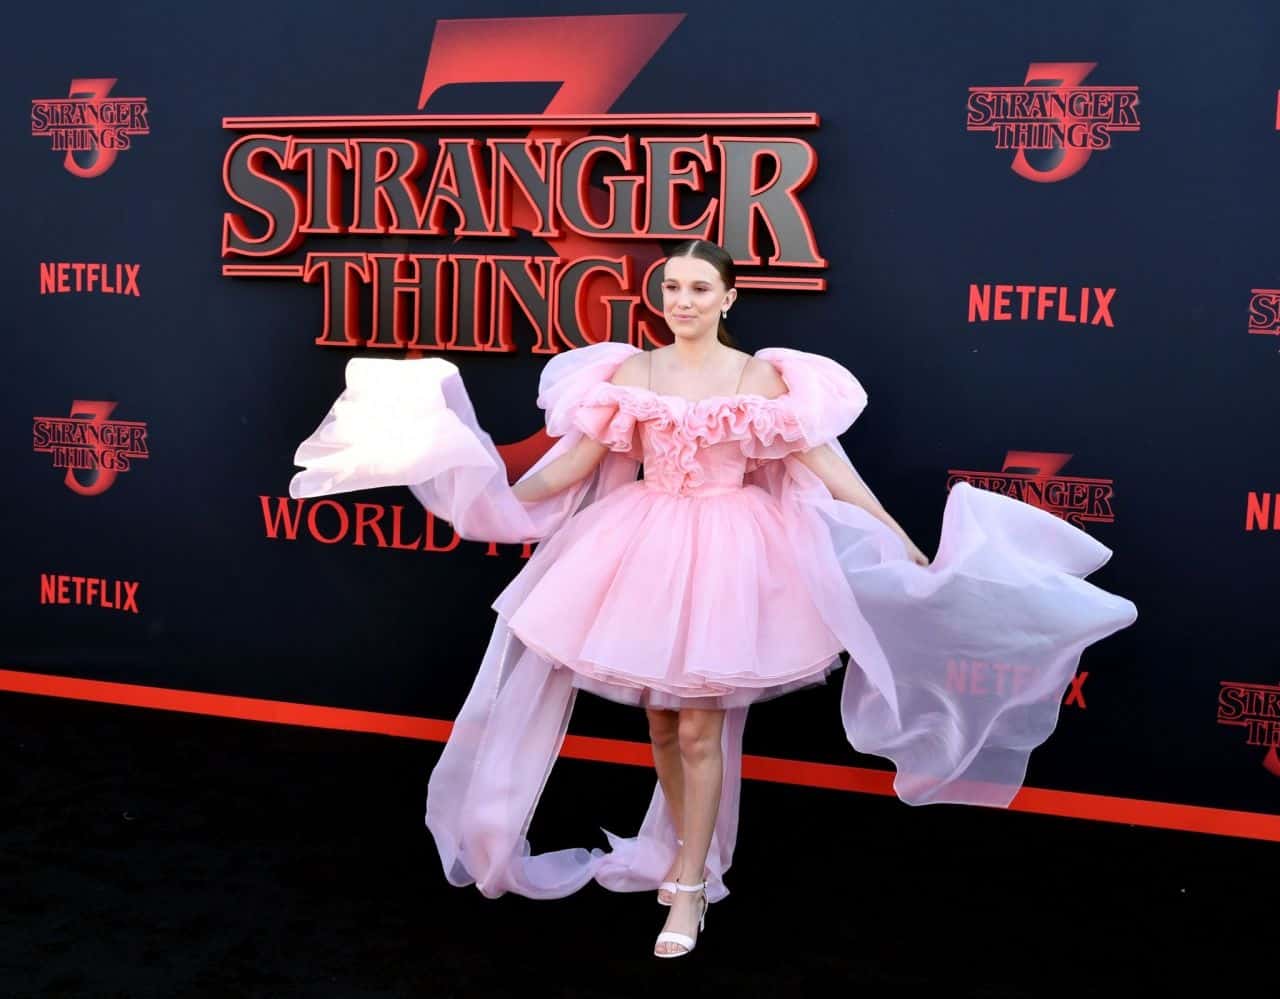 Millie Bobby Brown Stuns in Pink Rodarte Dress at "Stranger Things" Premiere